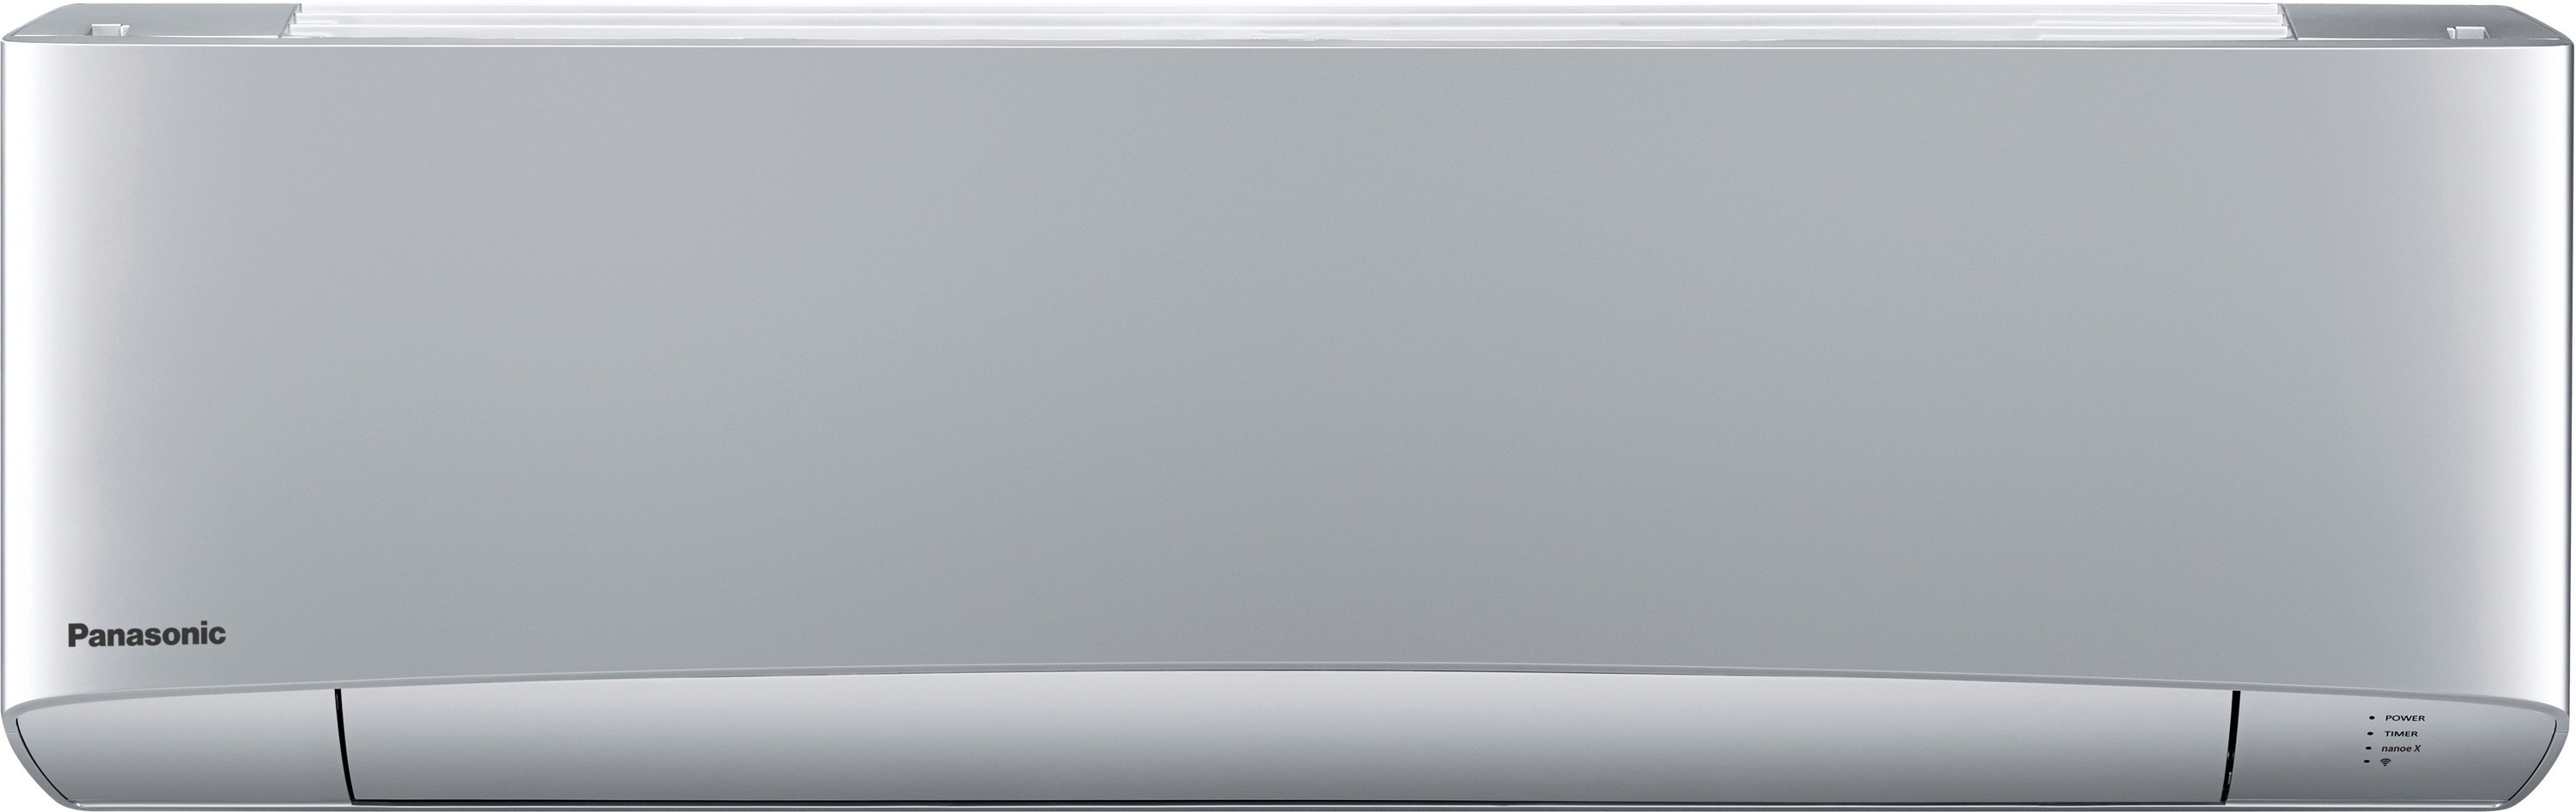 Кондиционер сплит-система Panasonic Flagship Silver CS/CU-XZ50TKEW цена 104998.00 грн - фотография 2